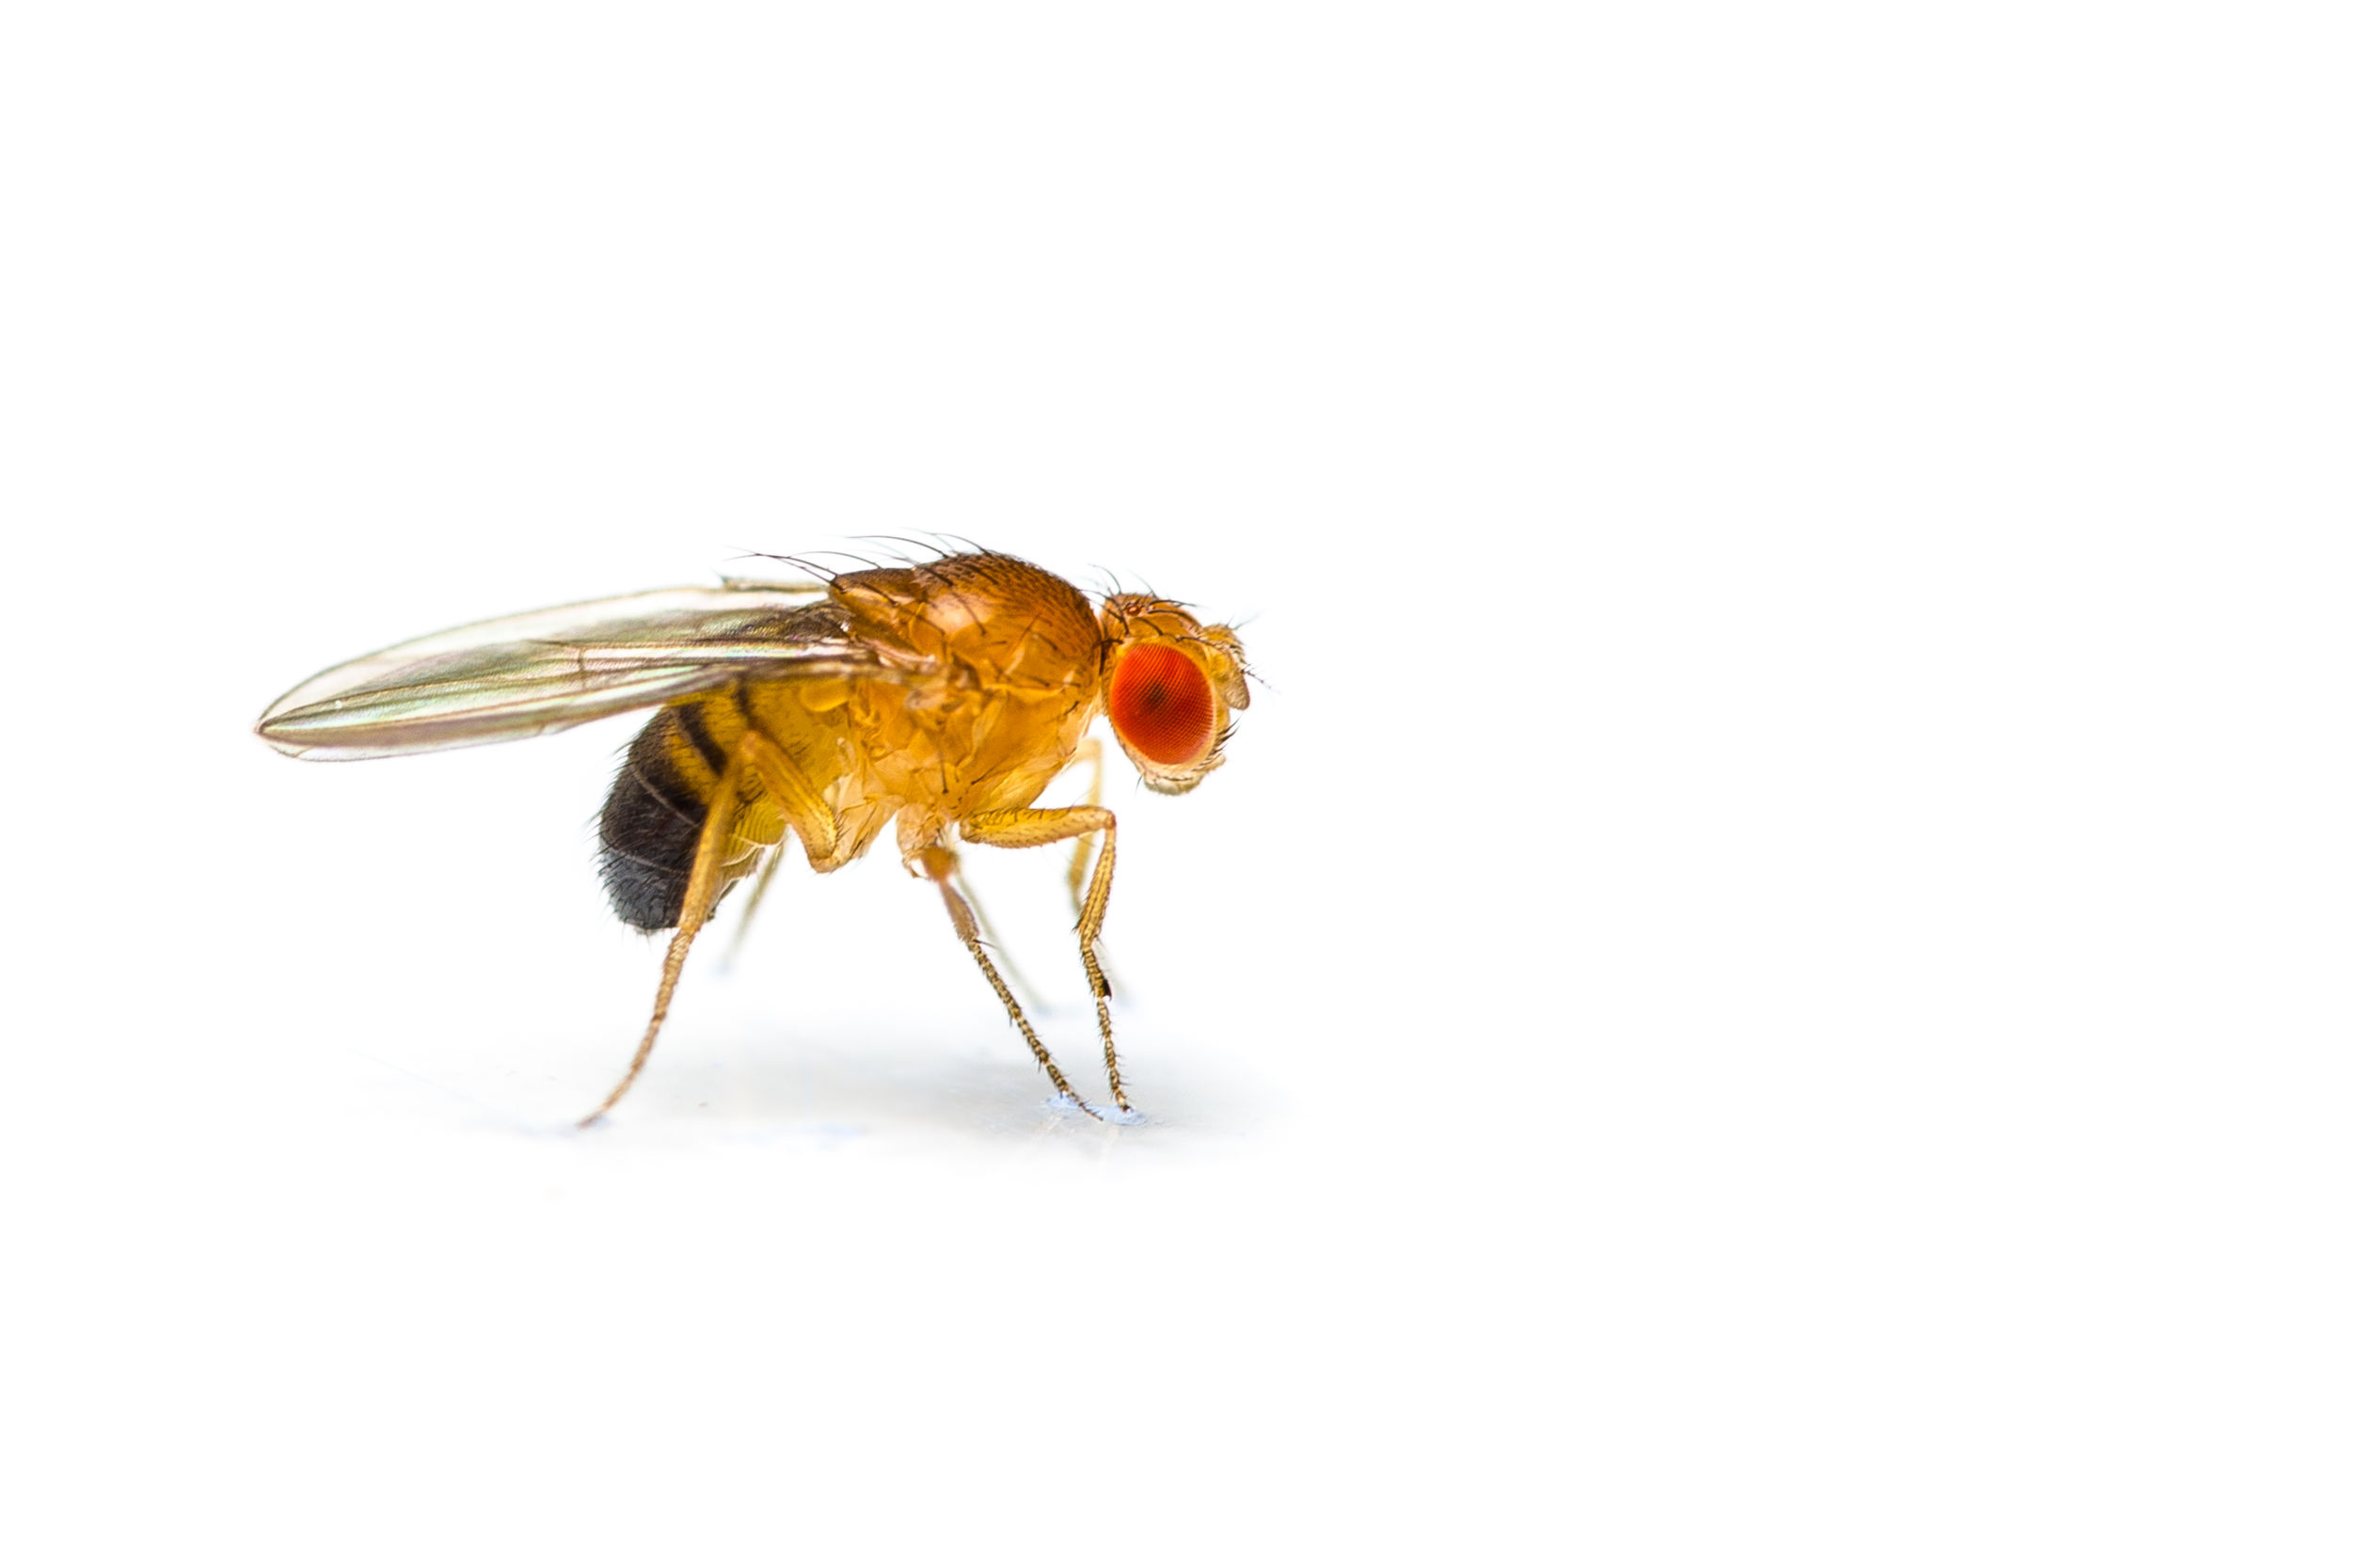 Fruit Fly Bar Pro insecticide vapor strip for restaurants